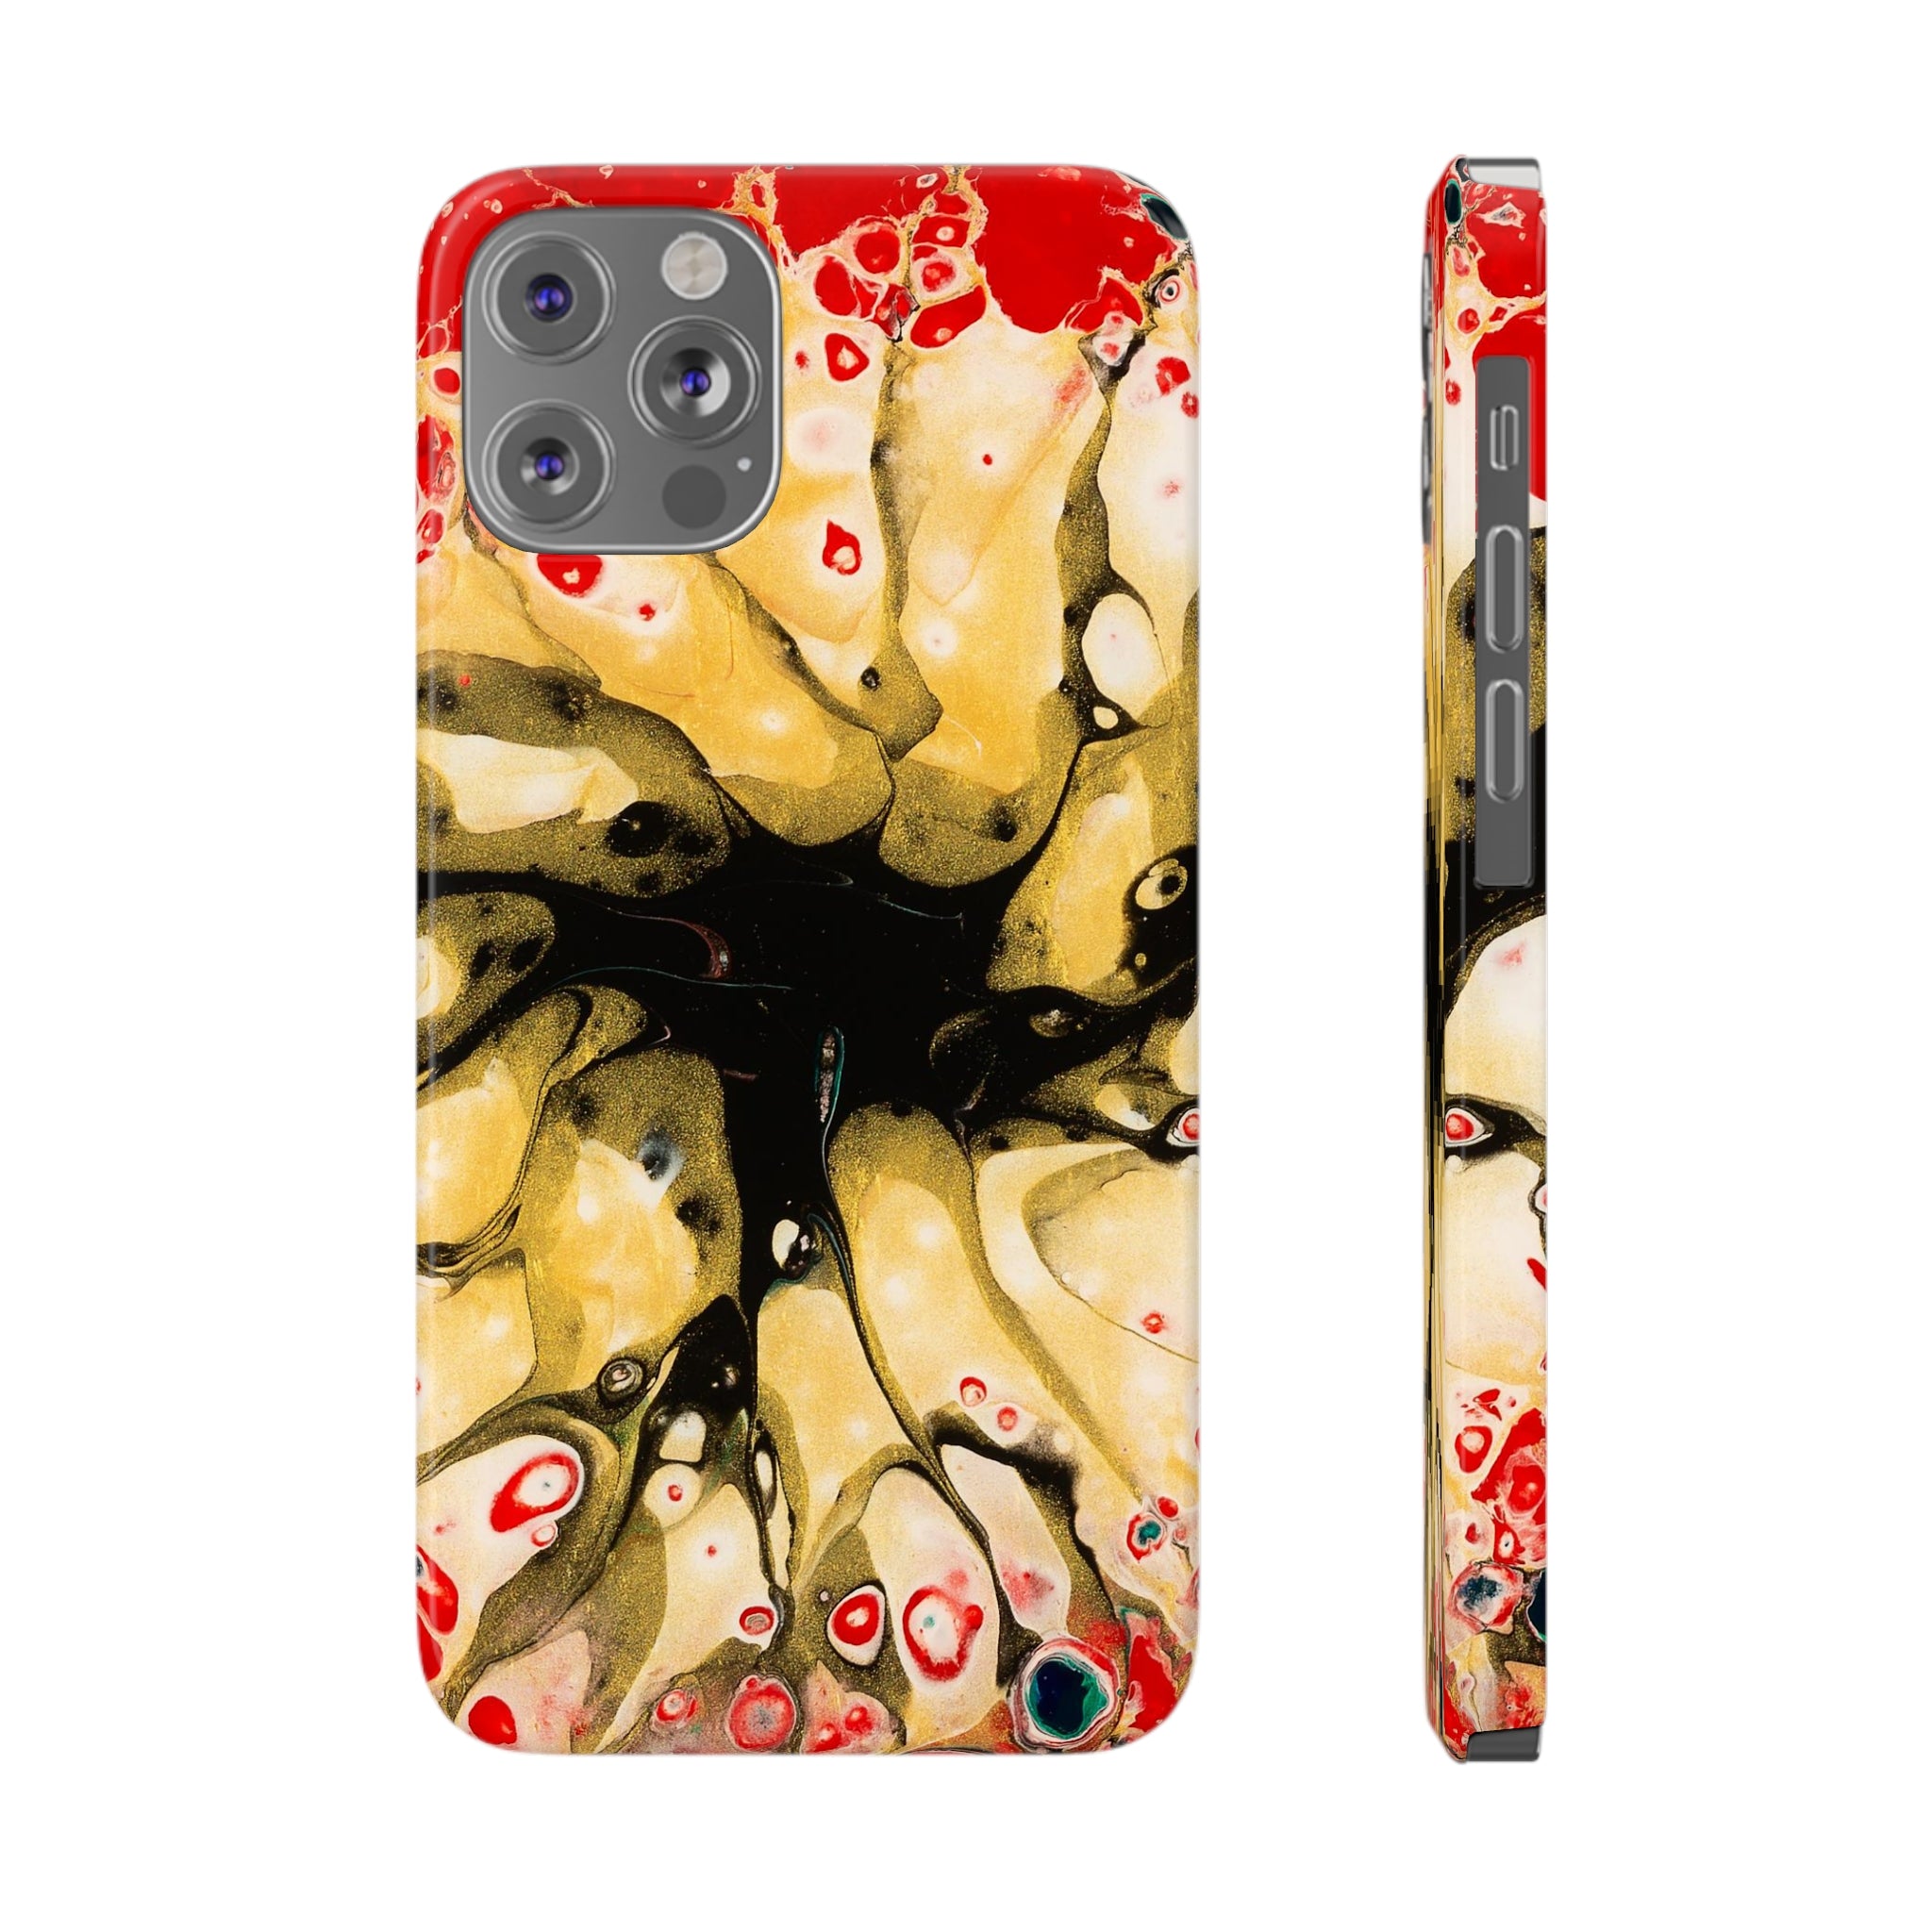 Golden Gate Portal - Slim Phone Cases